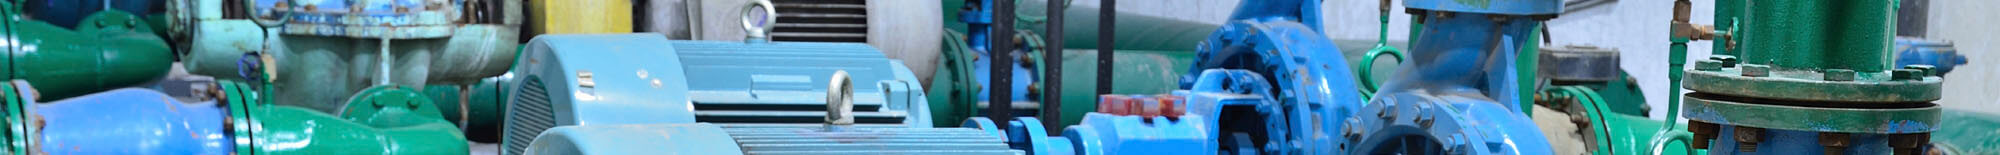 Rotary Gear Pumps | Industrial Pump Repair, Service, Maintenance